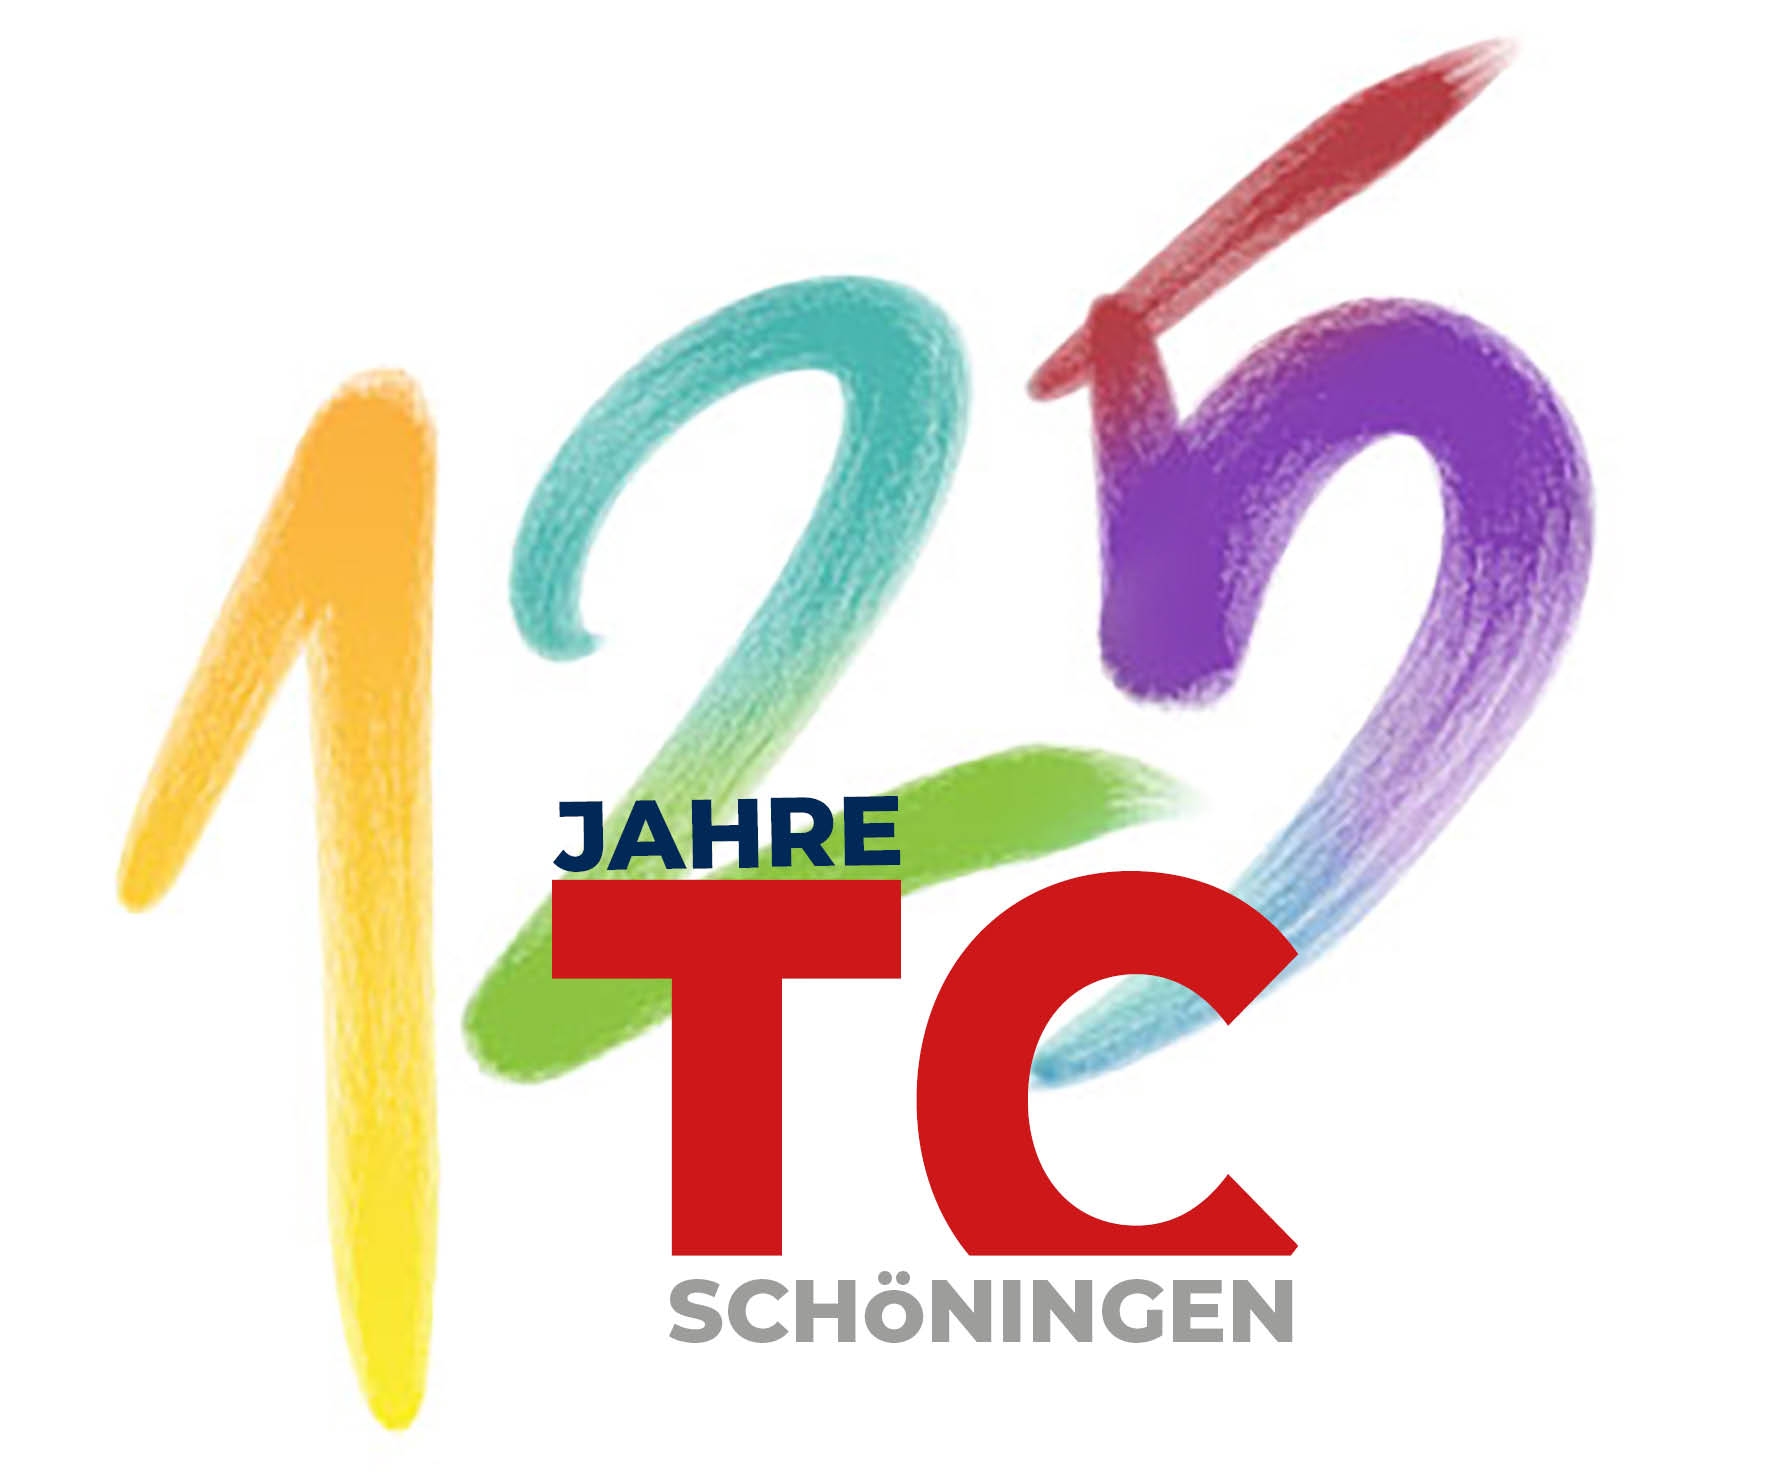 Logo 125